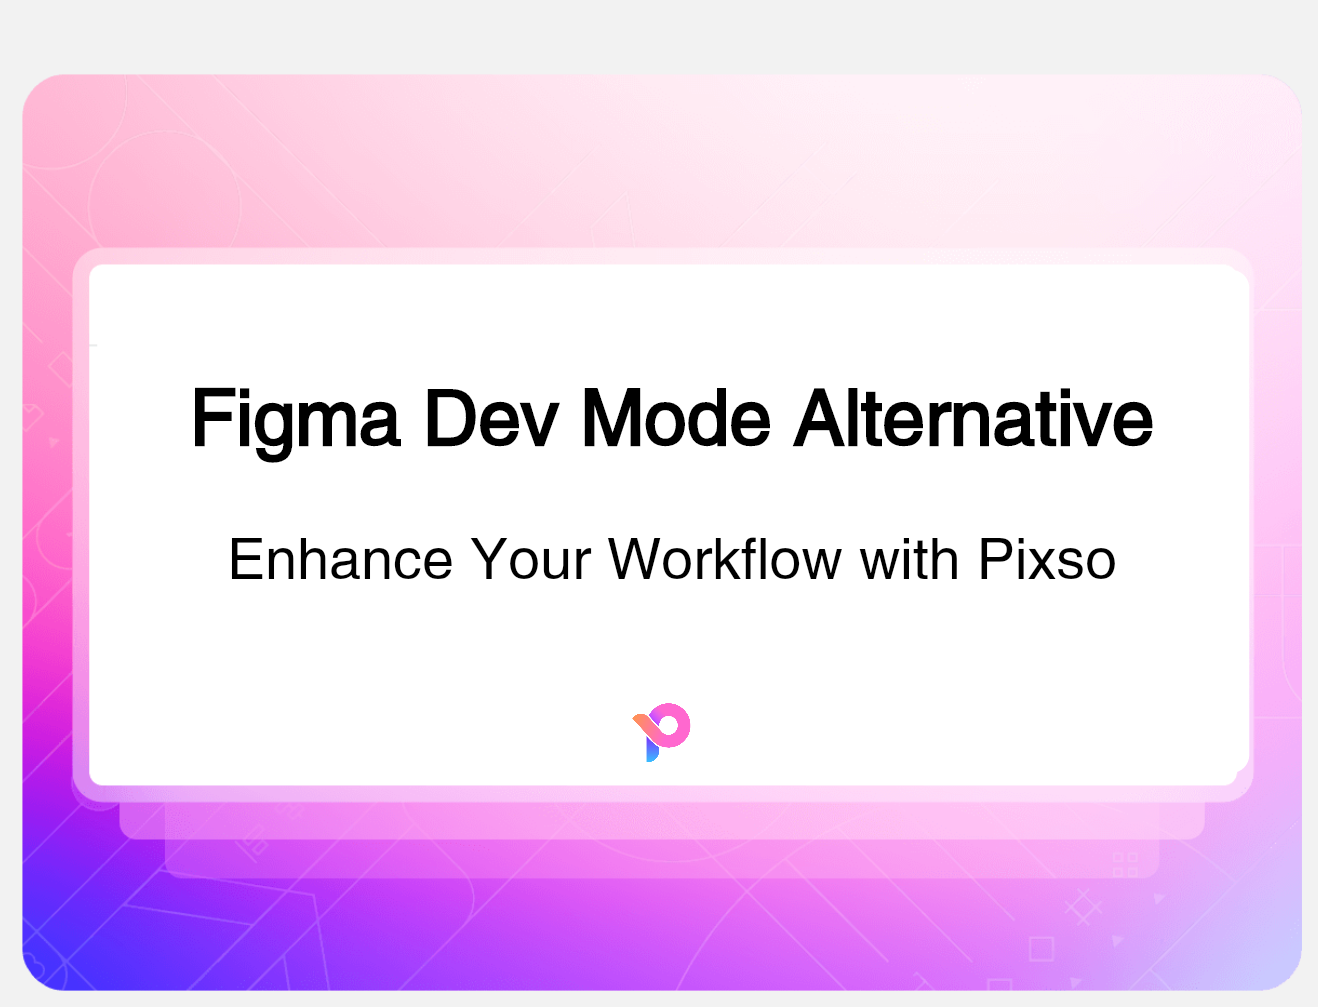 Figma Dev Mode Alternative | Pixso, An Online Design Tool for Free